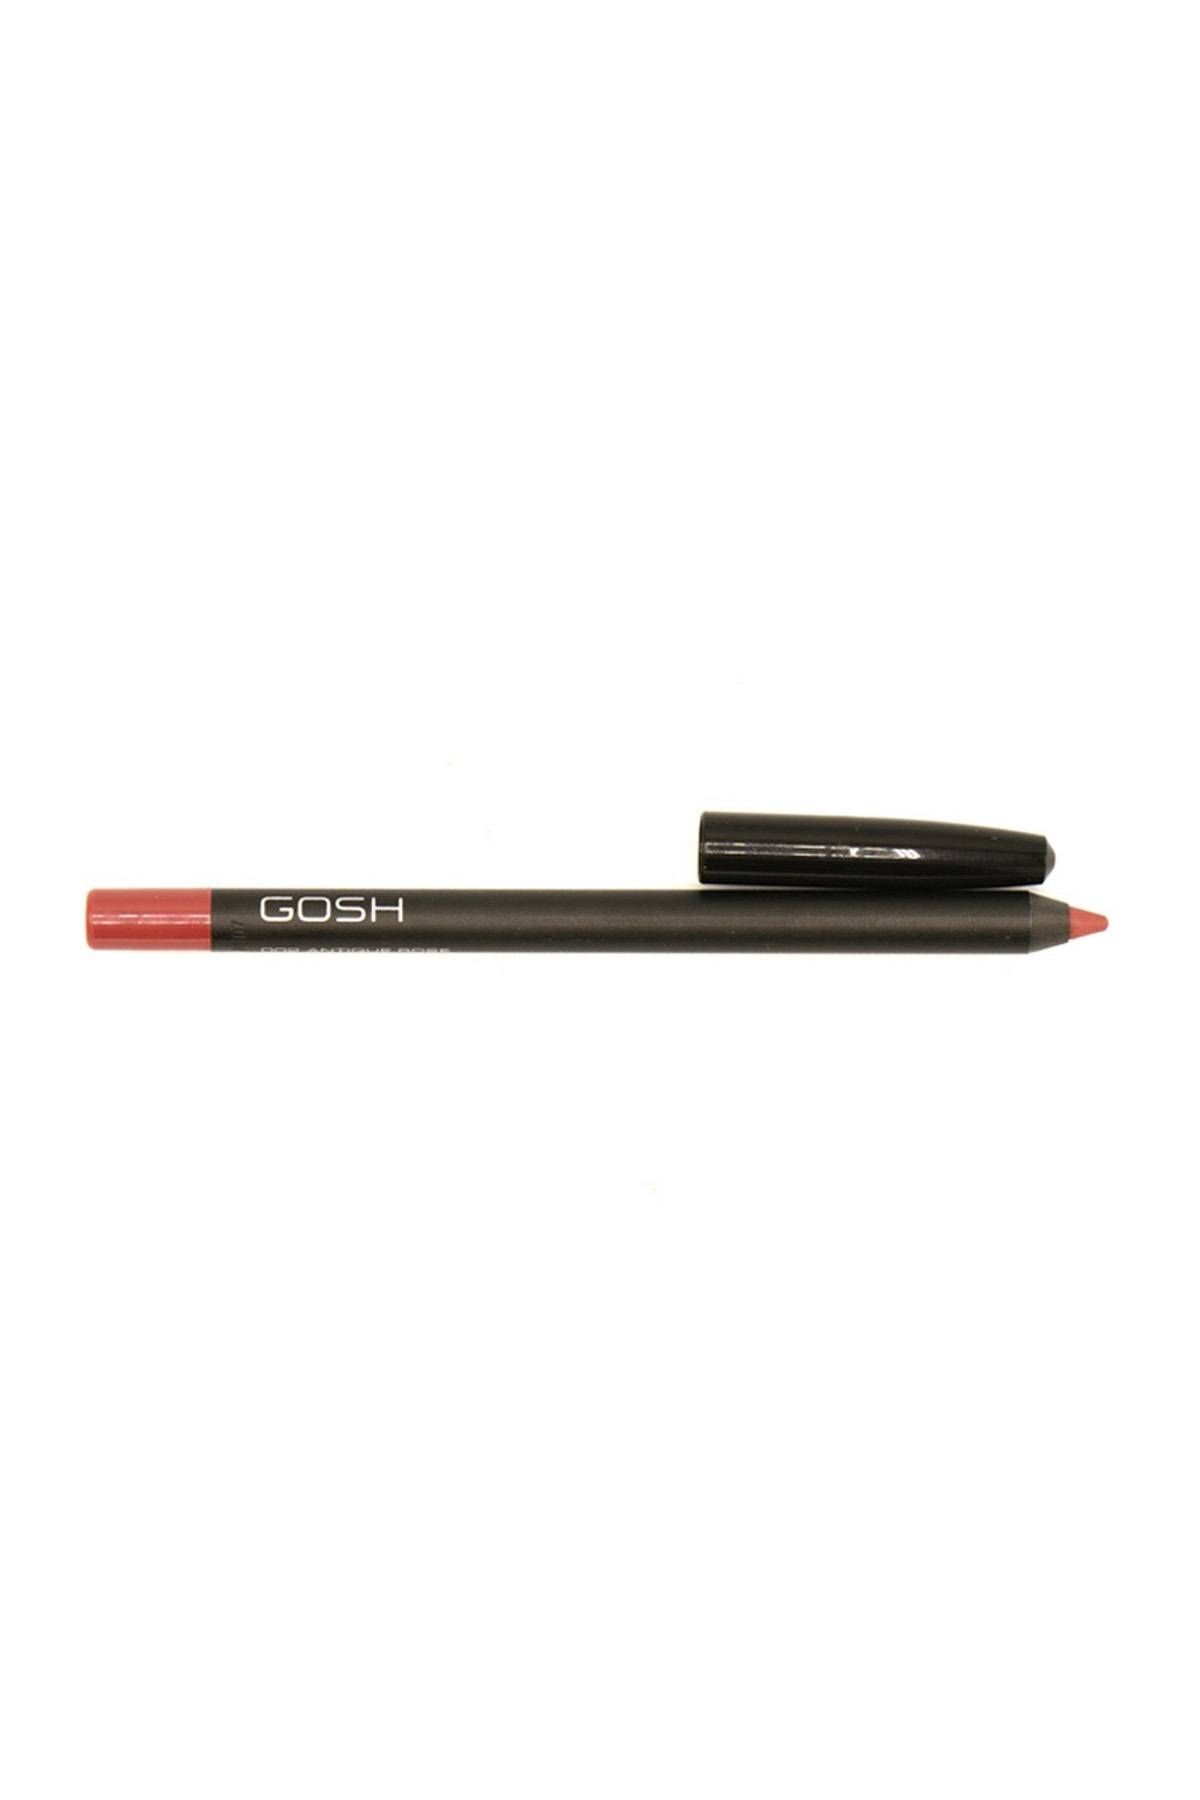 Gosh - Velvet Touch Waterproof Lip Liner - 002 Antique Red